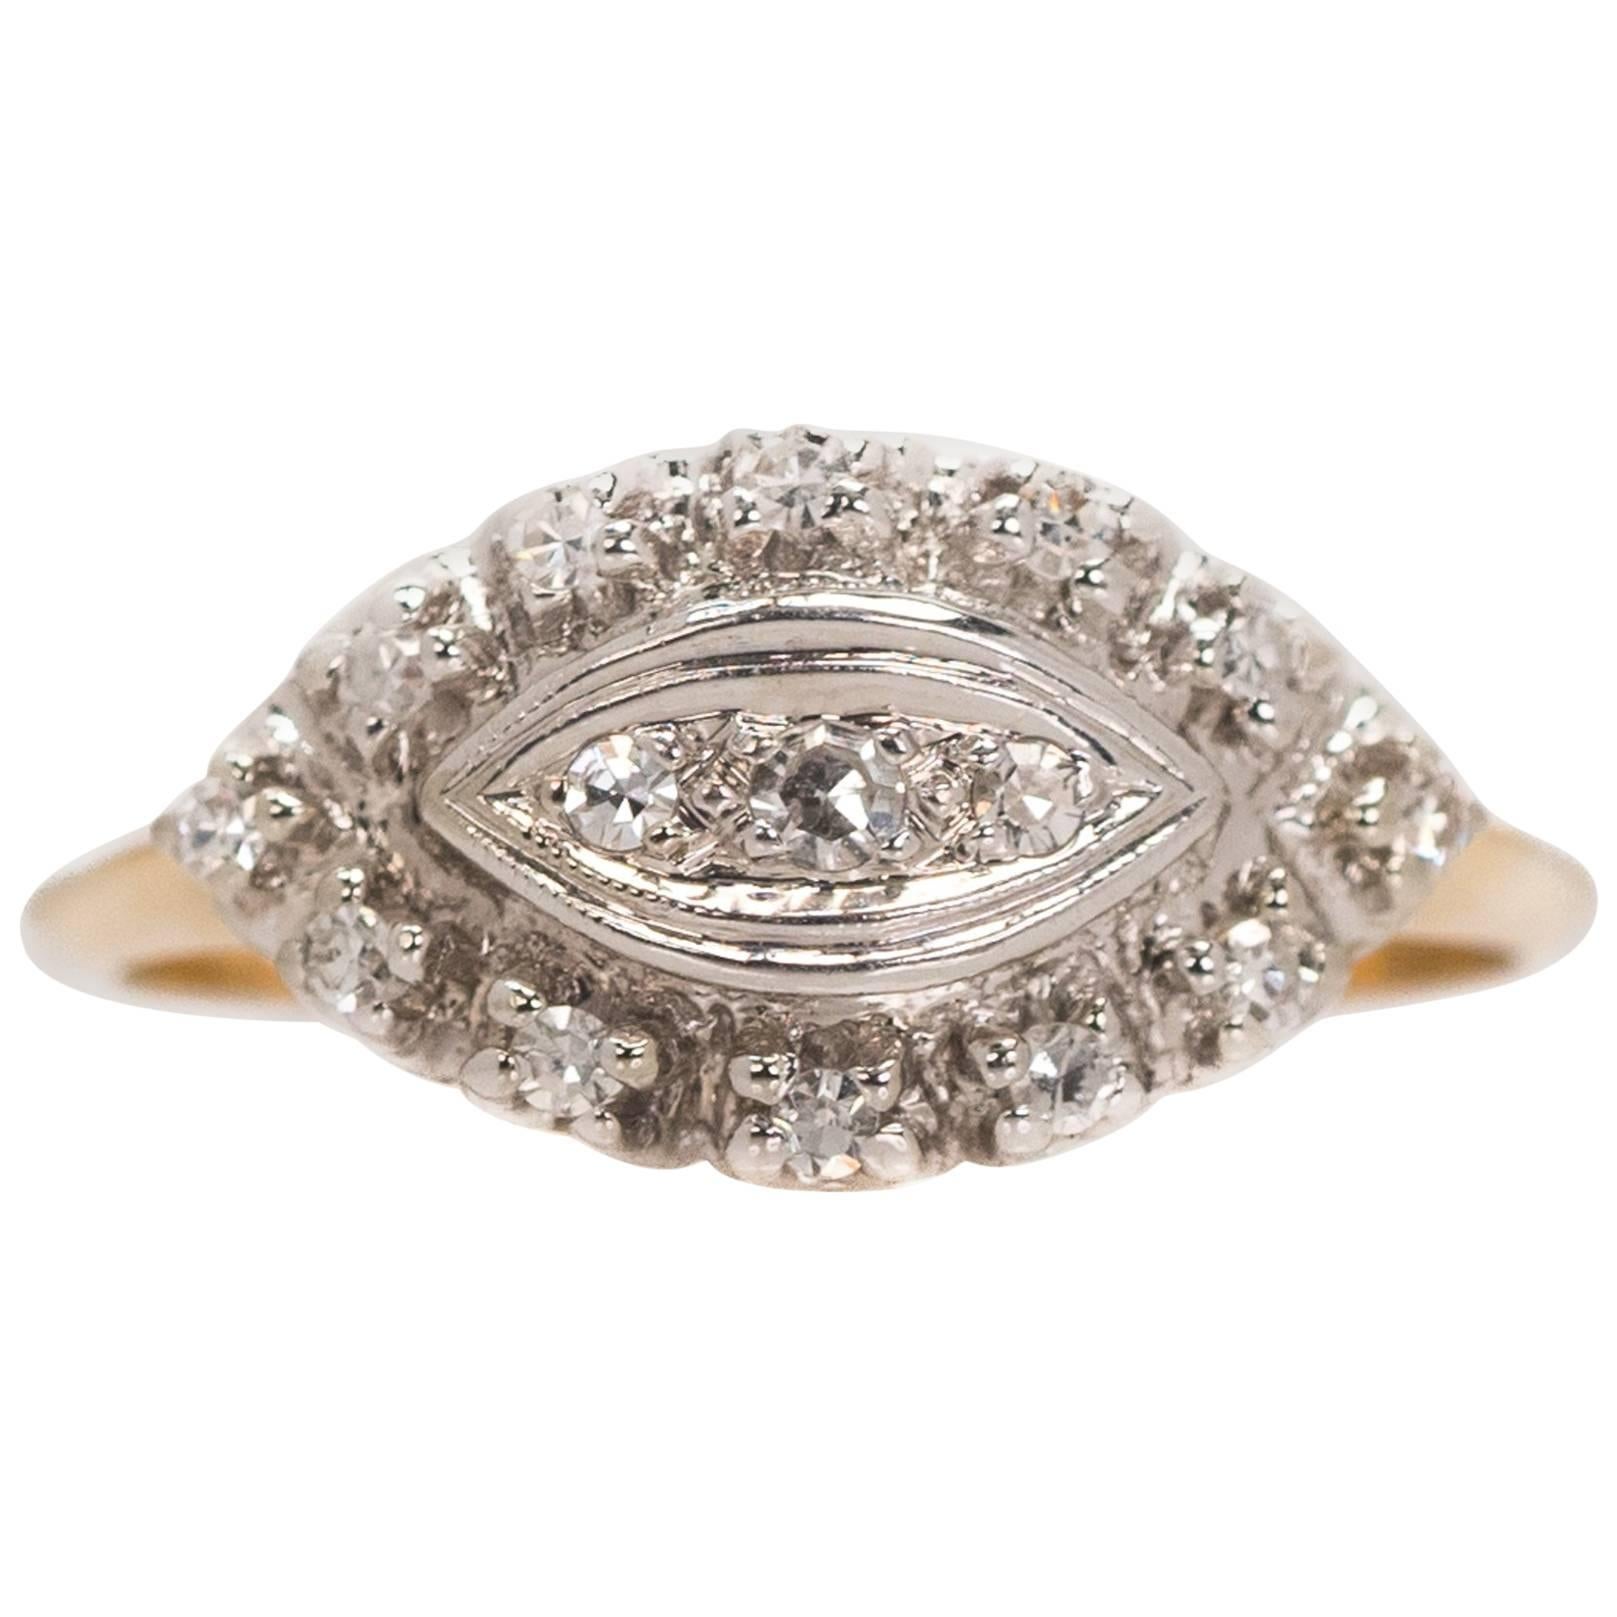 1930s 0.25 Carat Diamond and 14 Karat Gold Two-Tone Antique Ring